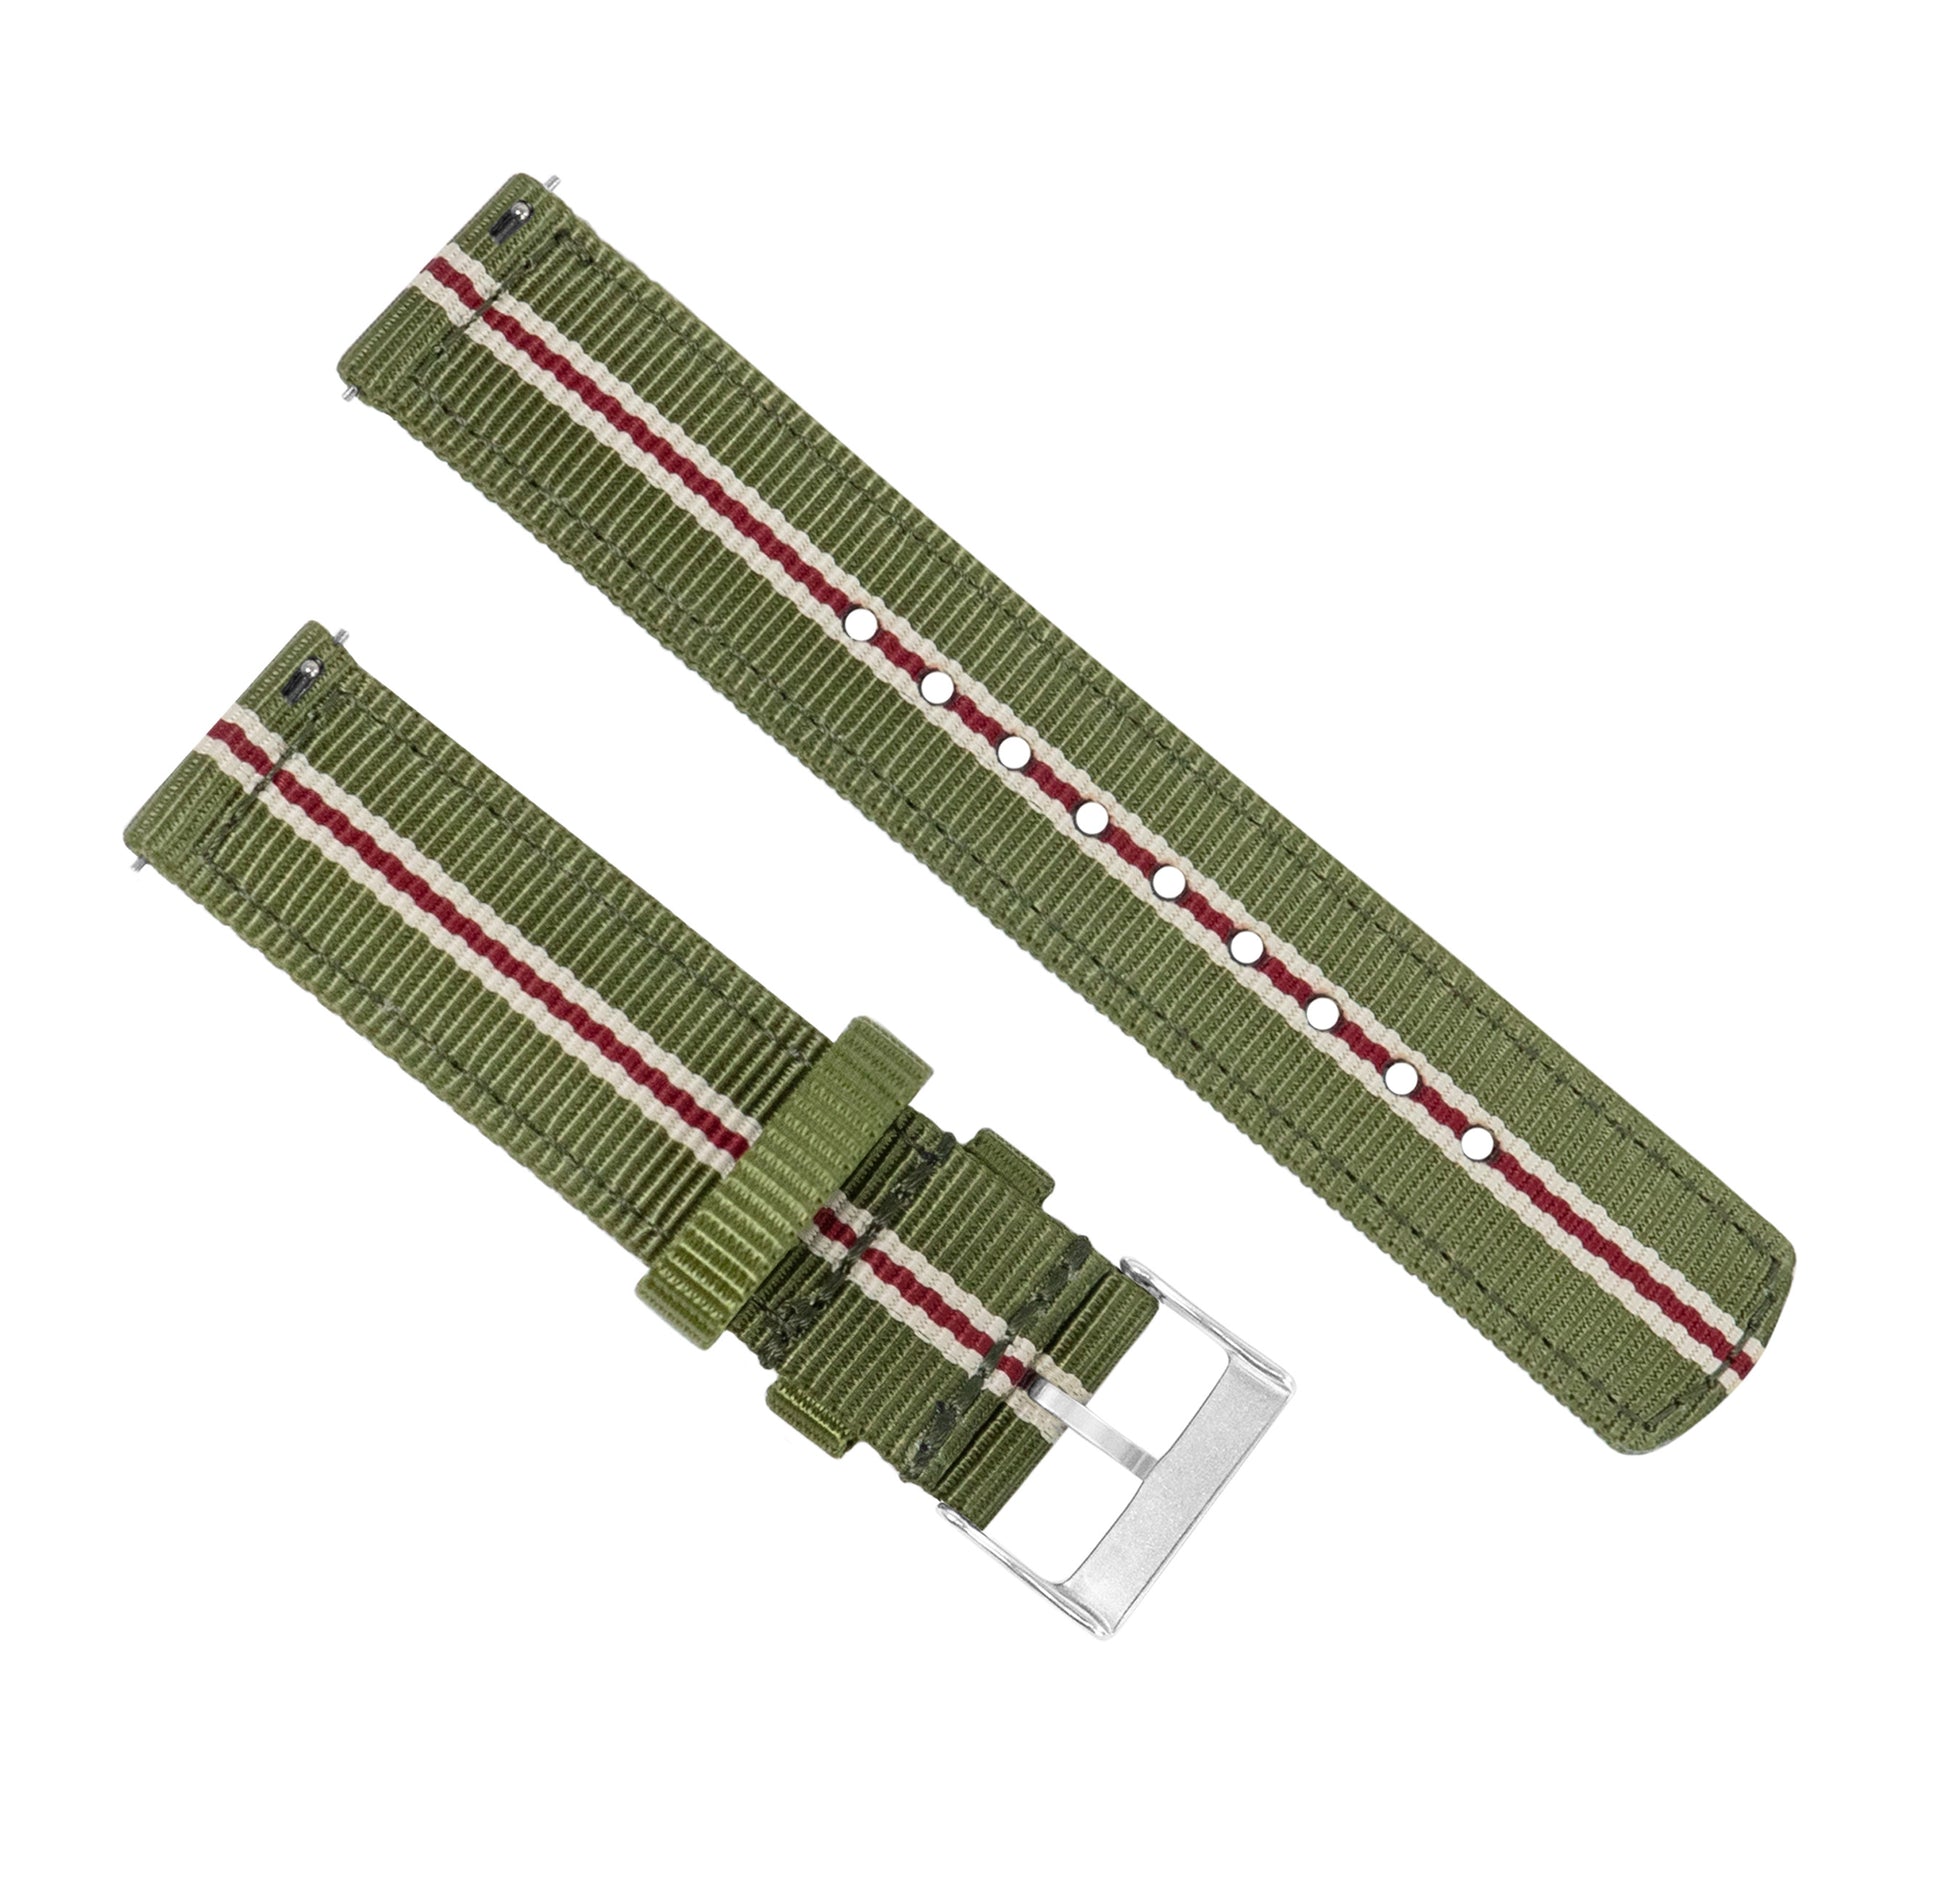 Samsung Galaxy Watch Active | Two-Piece NATO Style | Army Green & Crimson - Barton Watch Bands